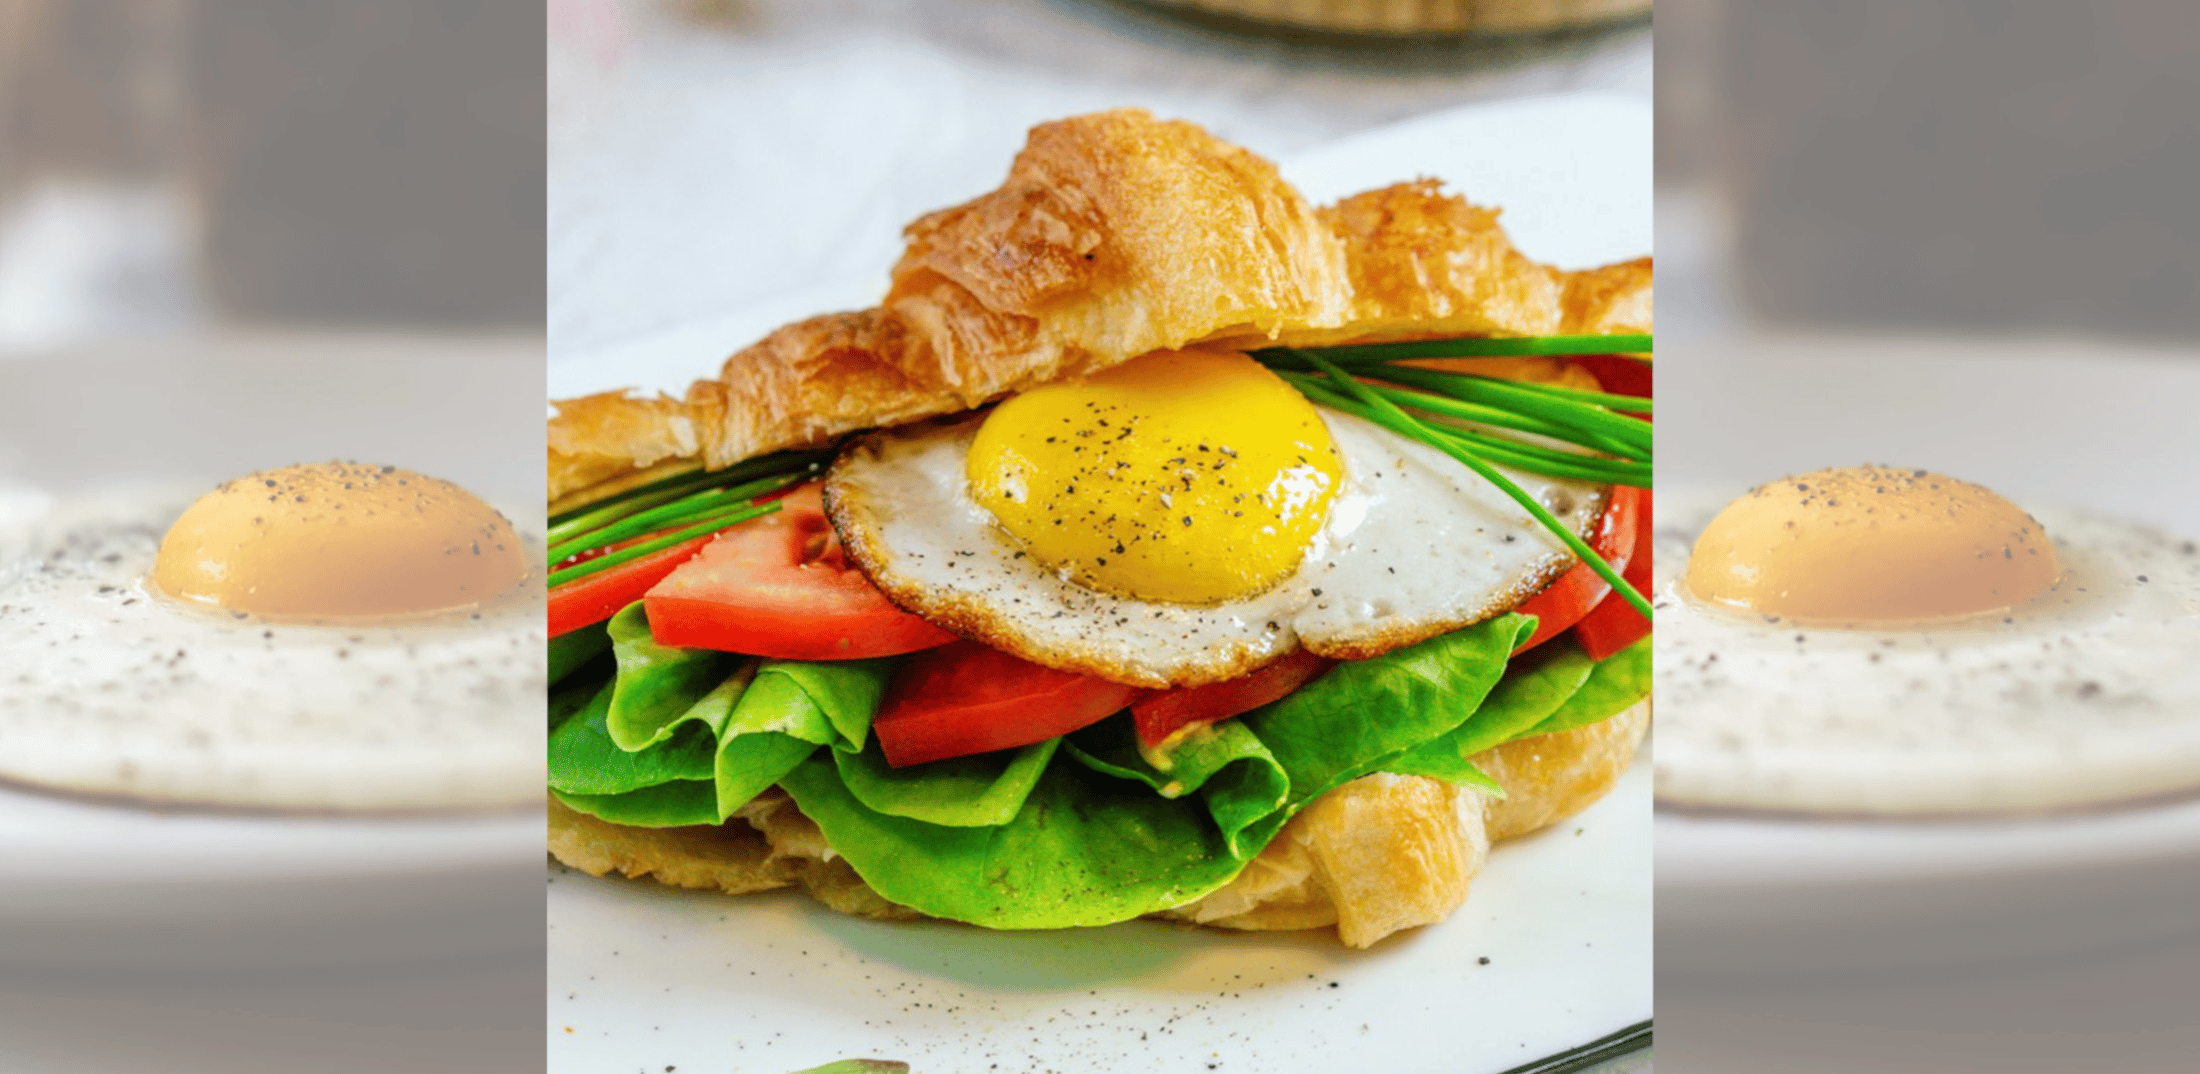 Incredible Vegan Fried Eggs with “Runny Yolks” to Debut in the U.S.